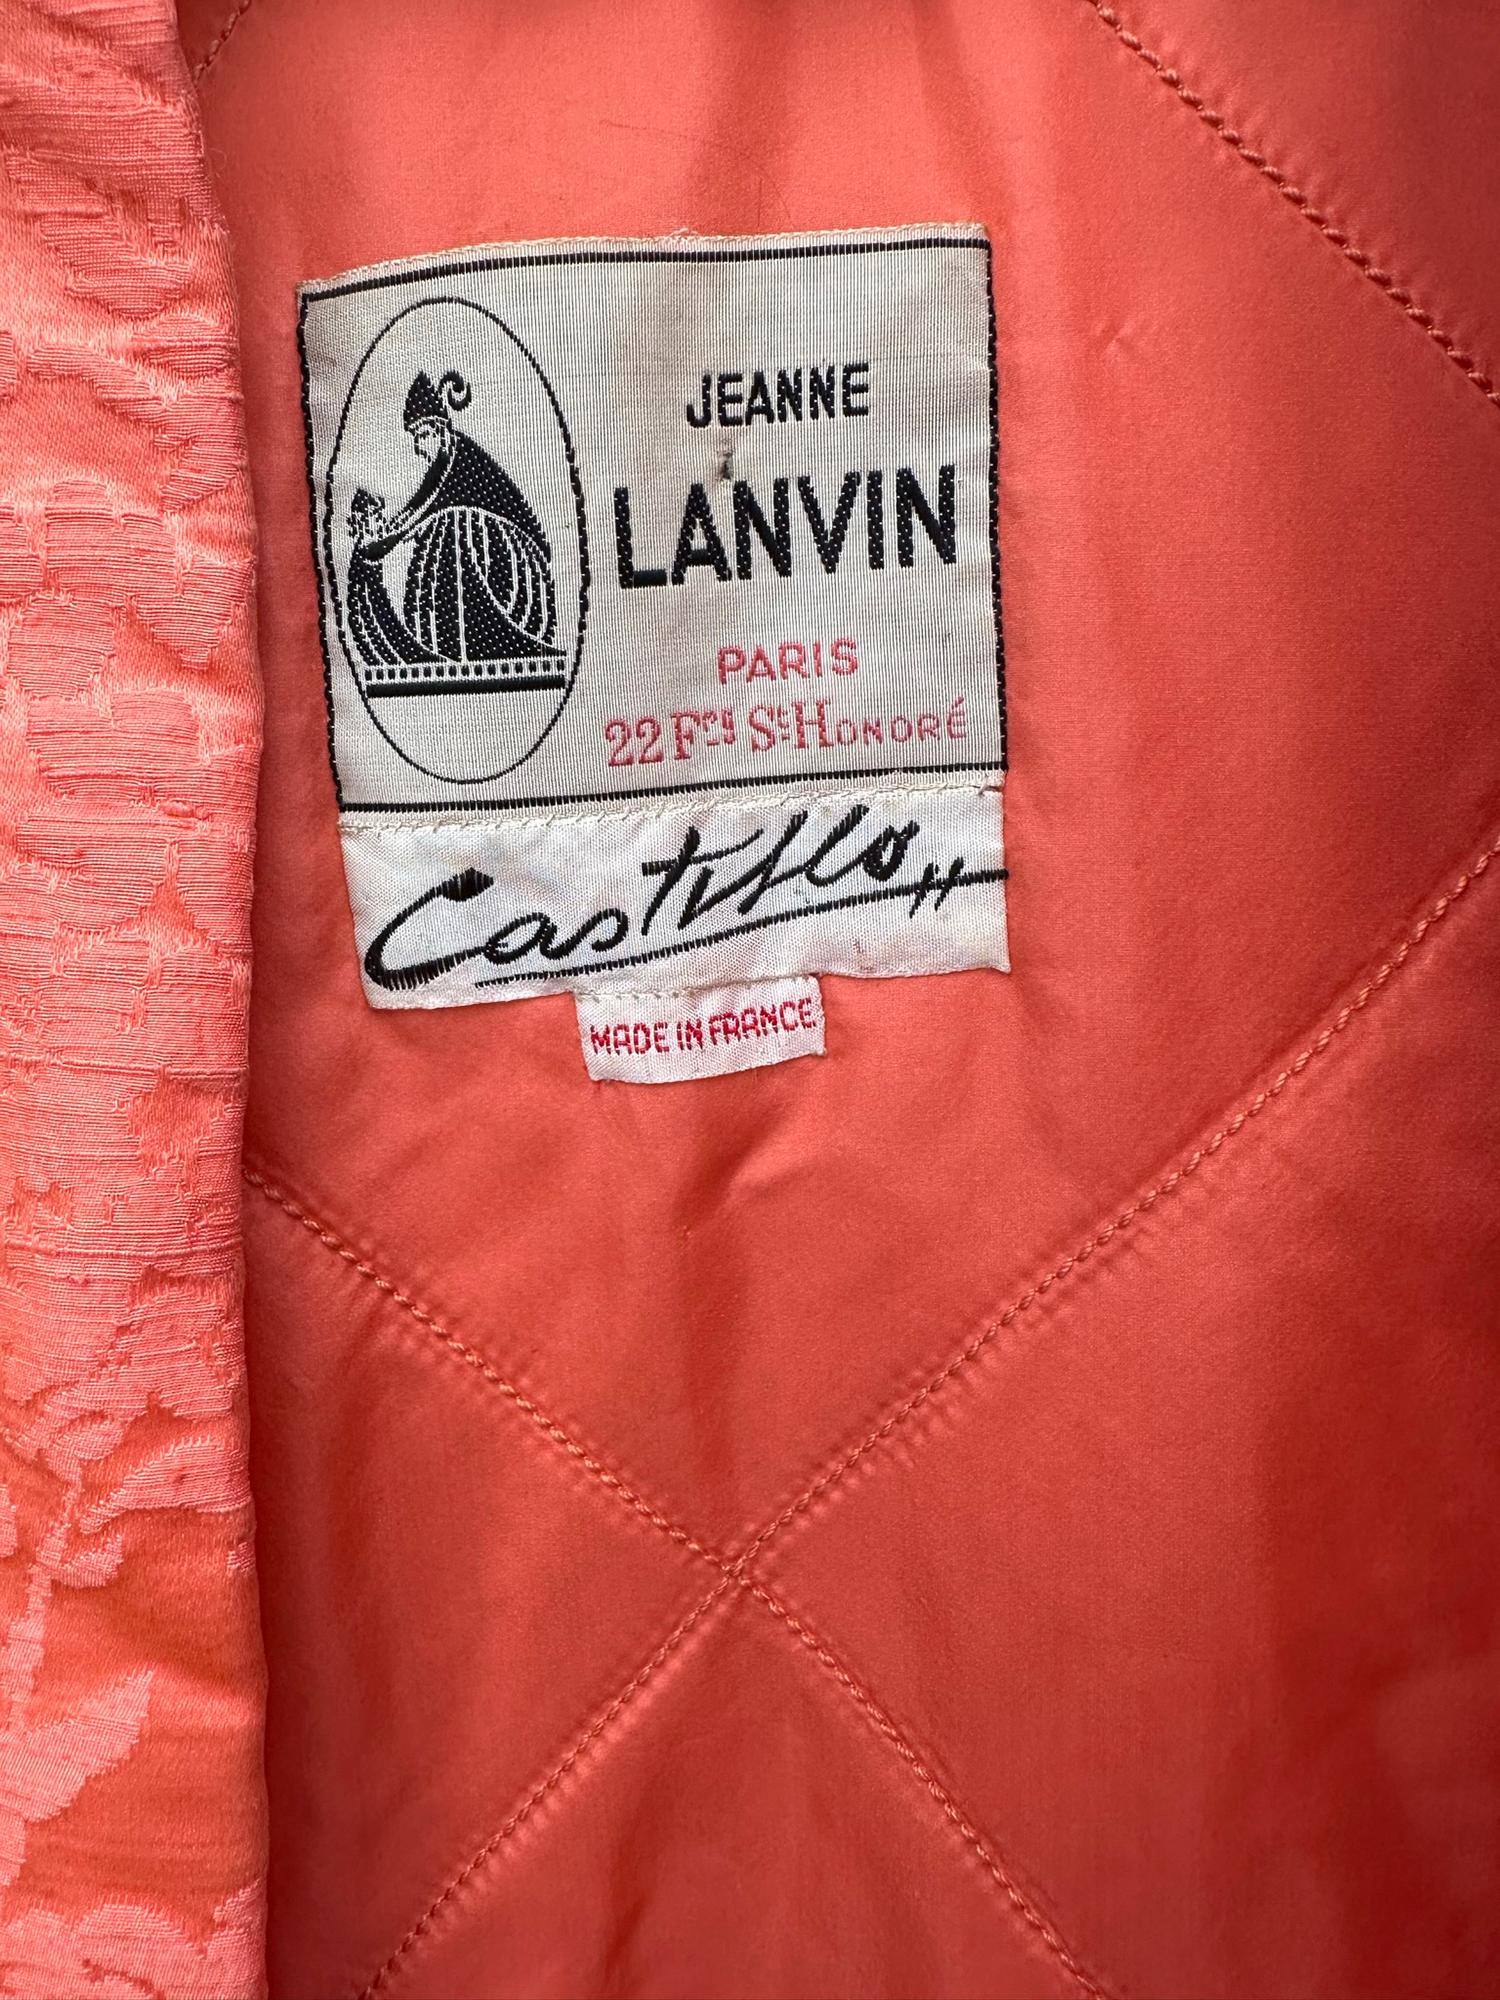 Lanvin Castello Haute Couture Coral Silk Brocade Coat & Dress Ensemble 1950s For Sale 14